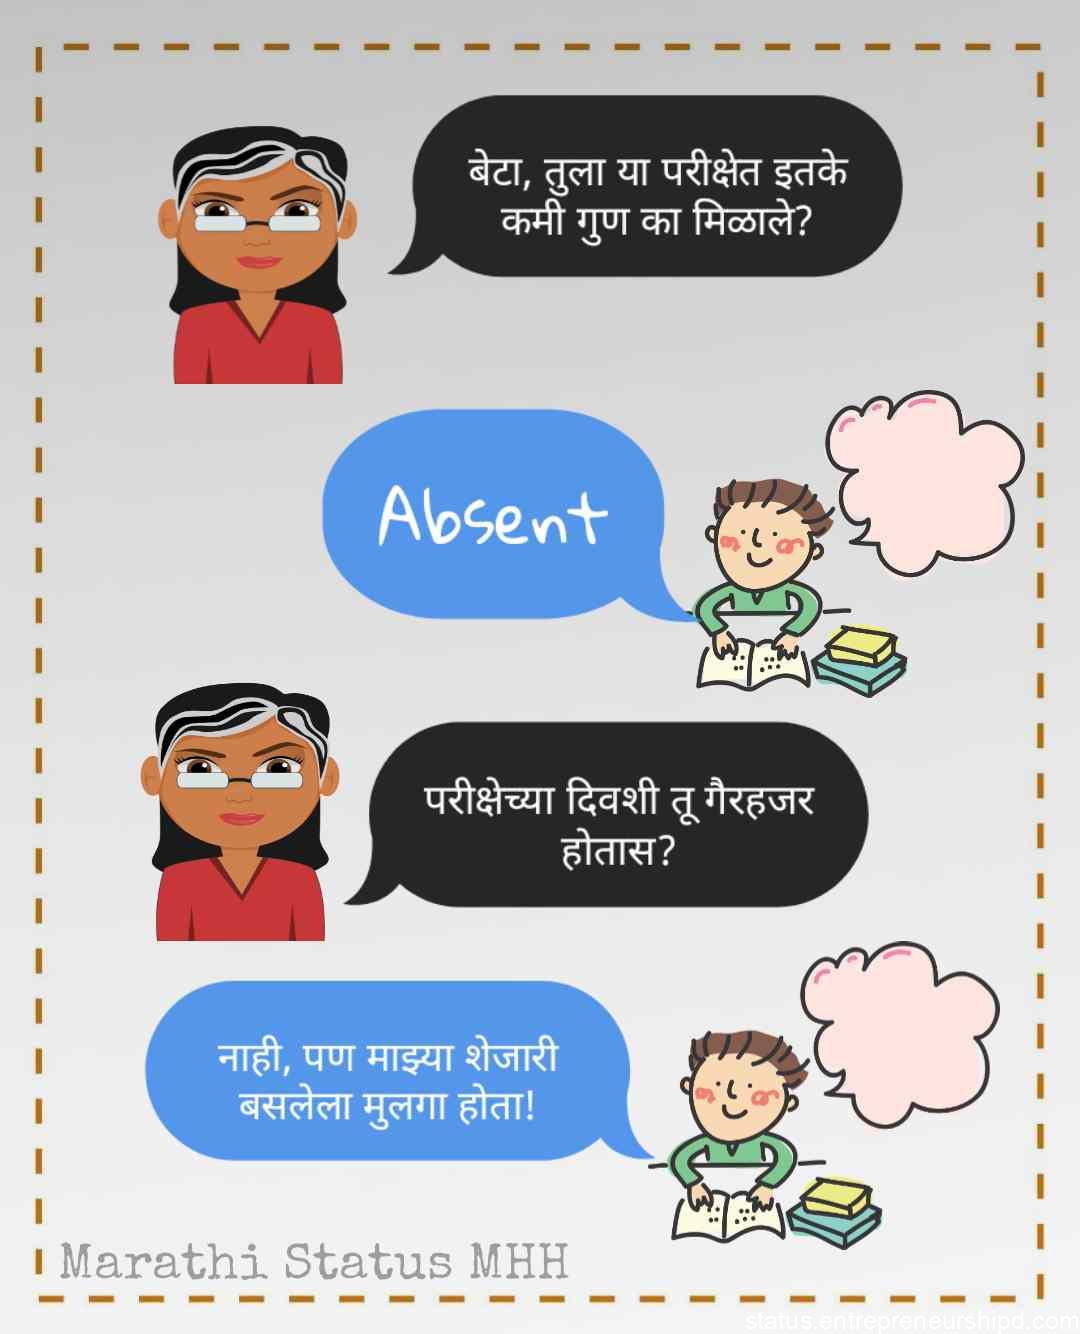 Mom and son Marathi memes funny